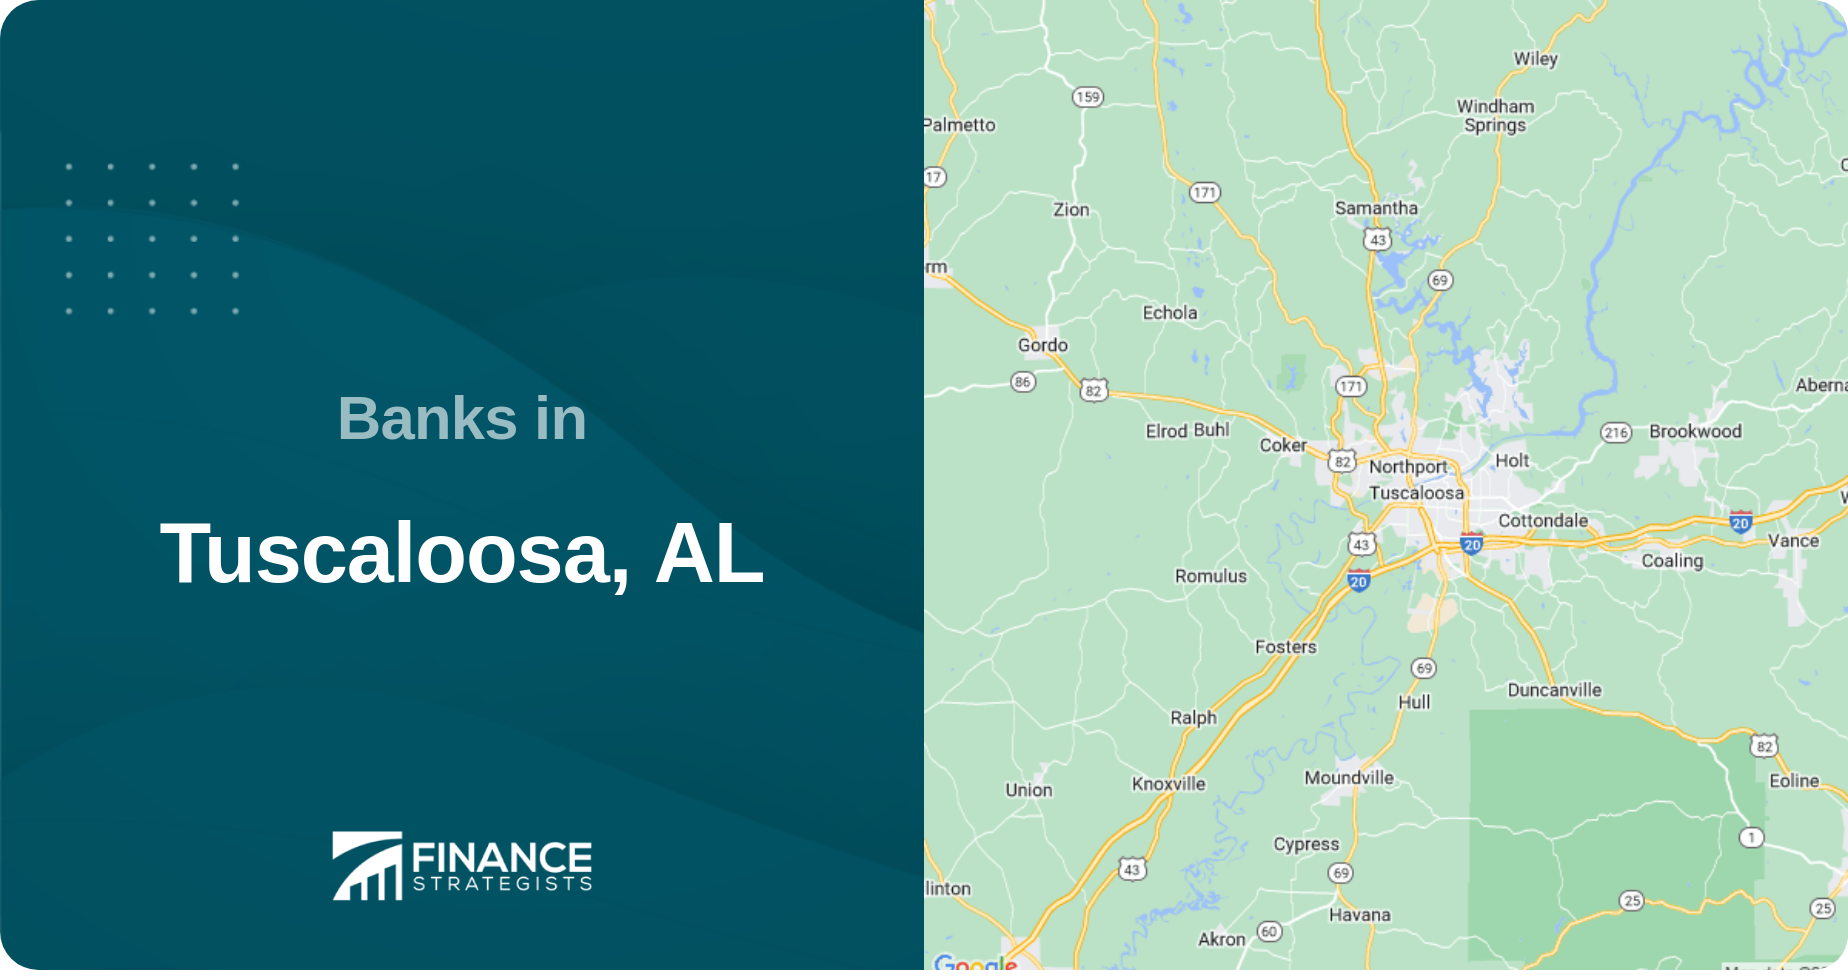 Banks in Tuscaloosa, AL